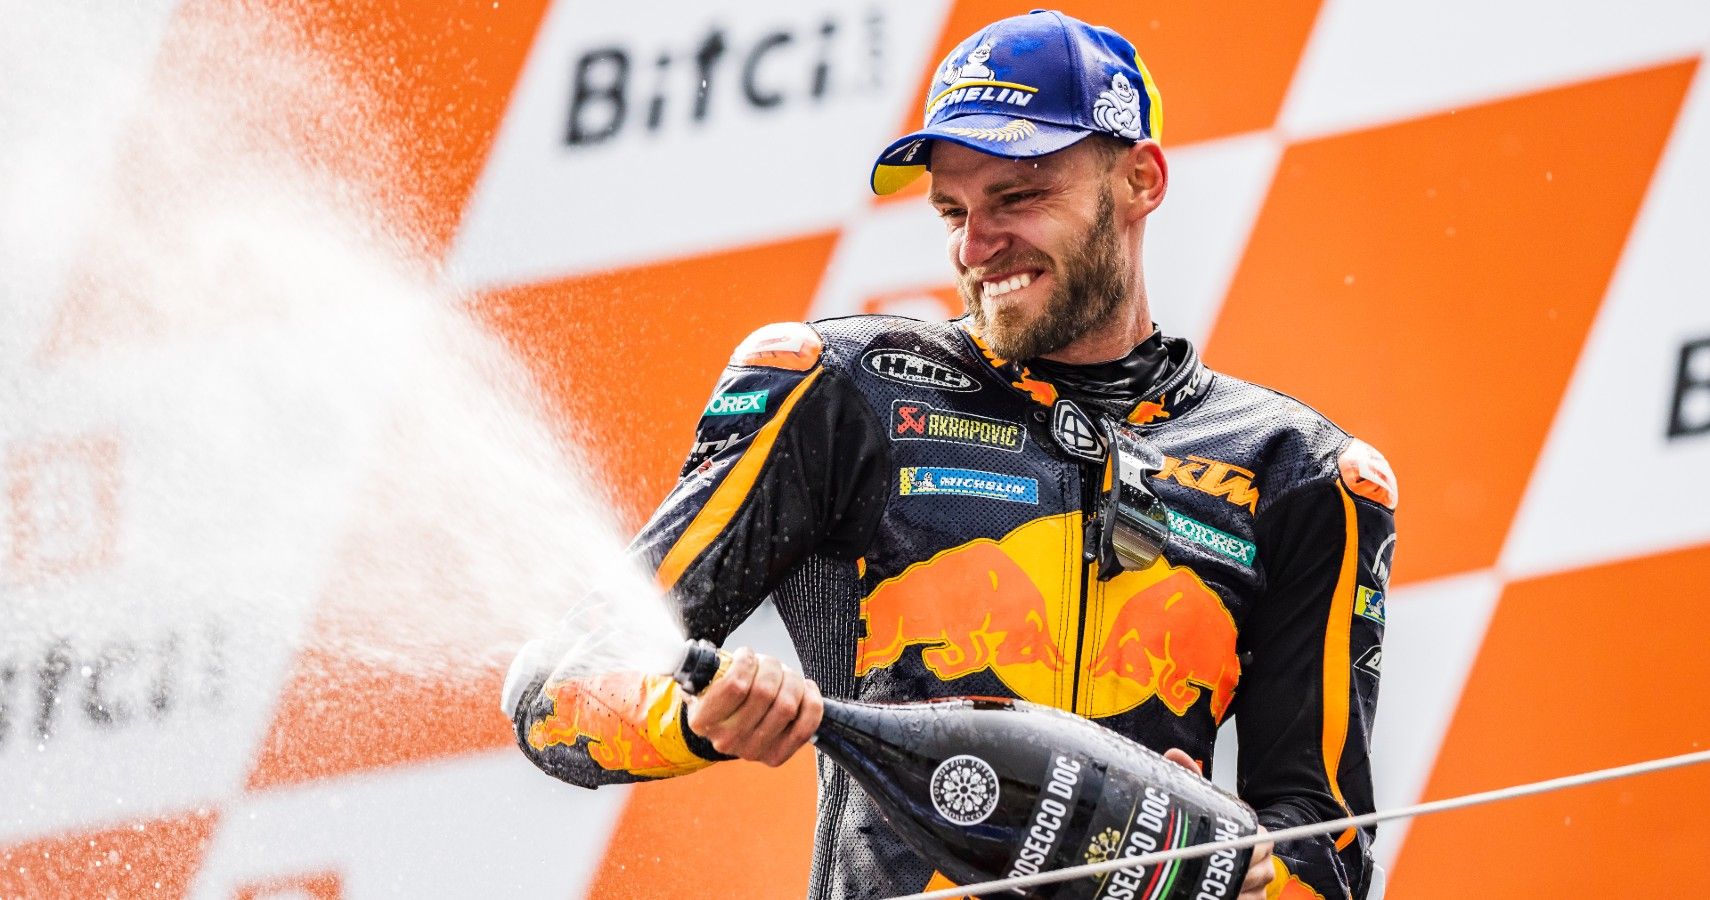 KTM rider Brad Binder celebrating his win after the 2021 MotoGP race in Austria.